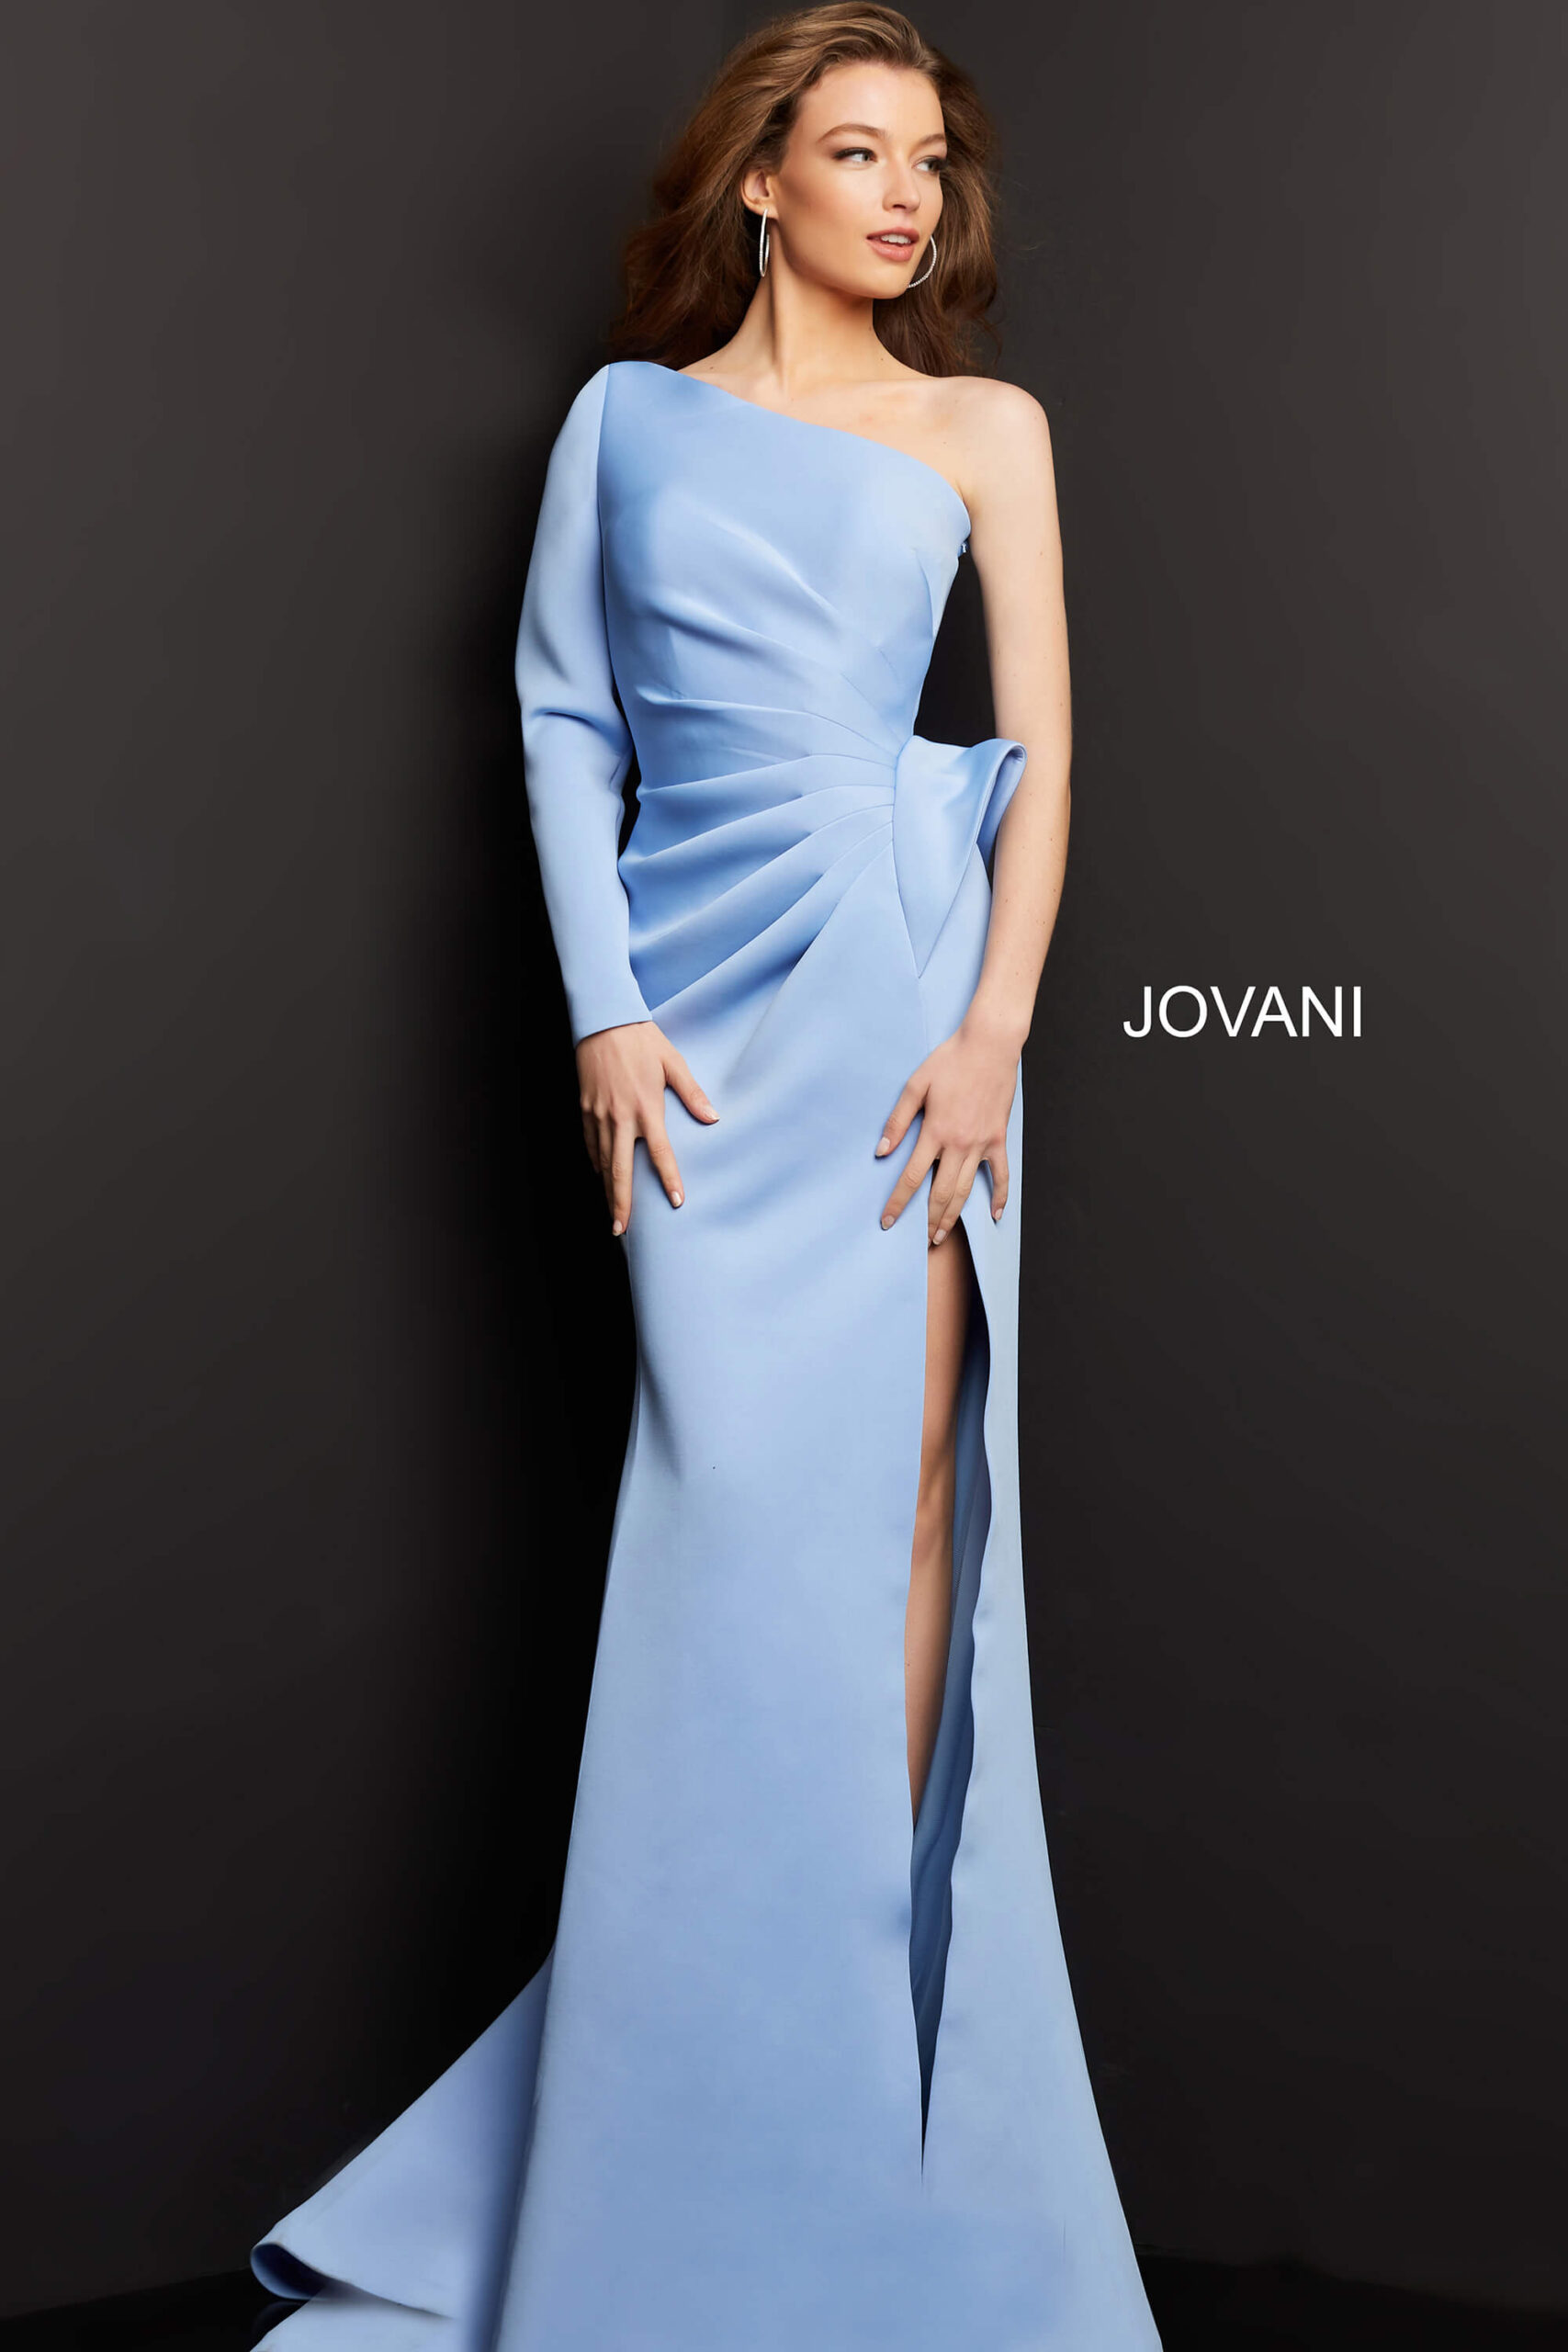 Jovani 06998 Light Blue One Shoulder Long Sleeve Evening Gown